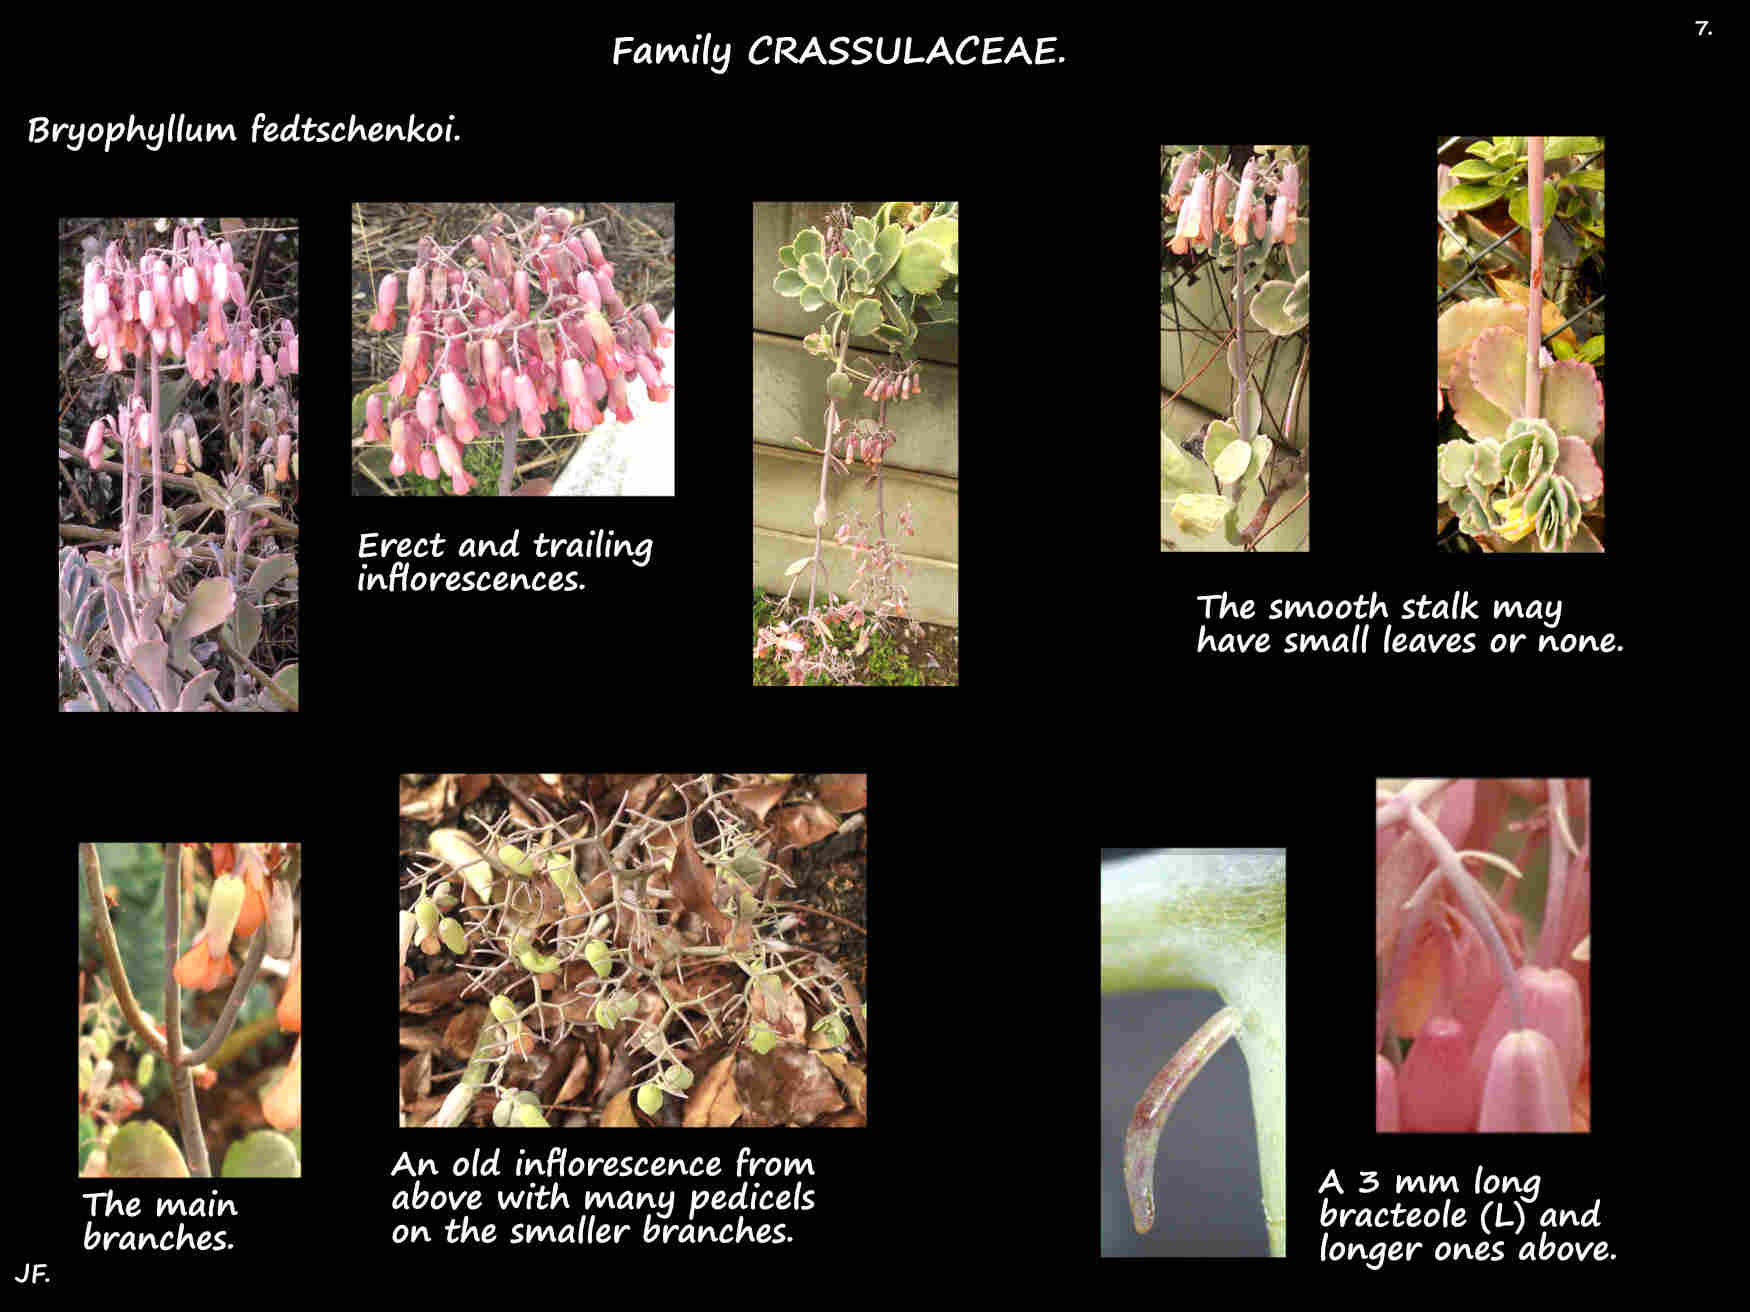 7 Bryophyllum fedtschenkoi inflorescences